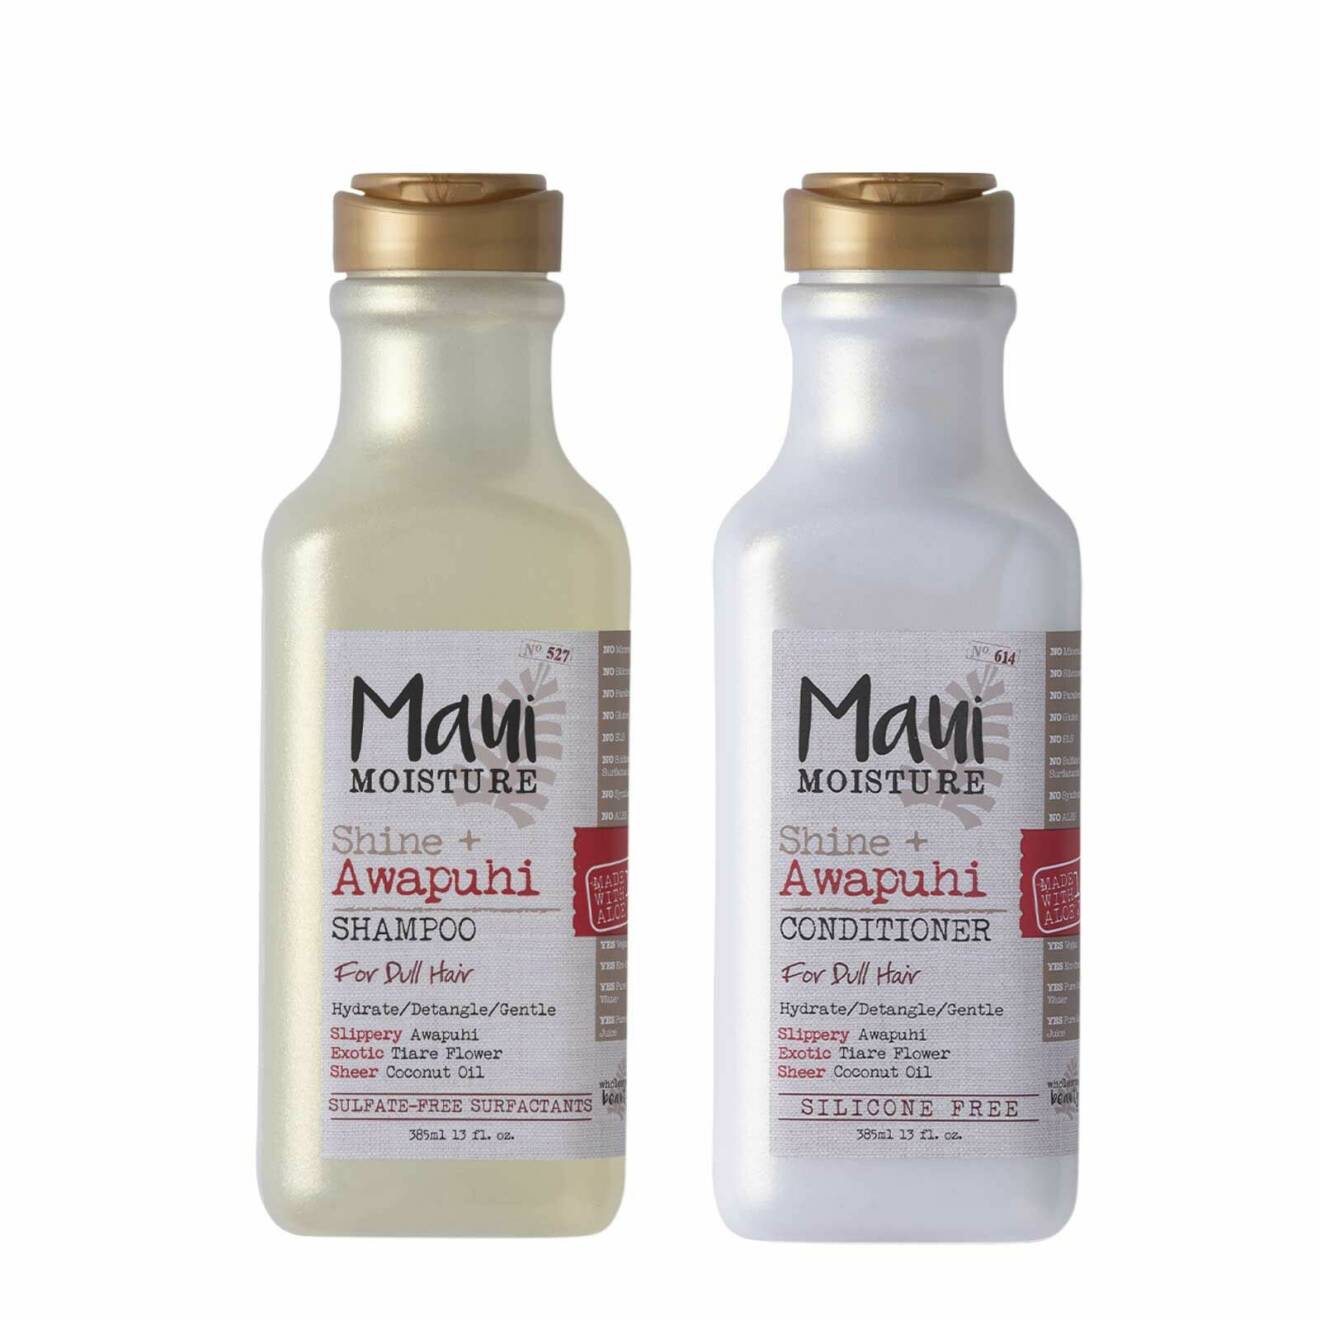 Shine Ampli­fying + Awapuhi schampo och balsam från Maui Moisture Hair Care.